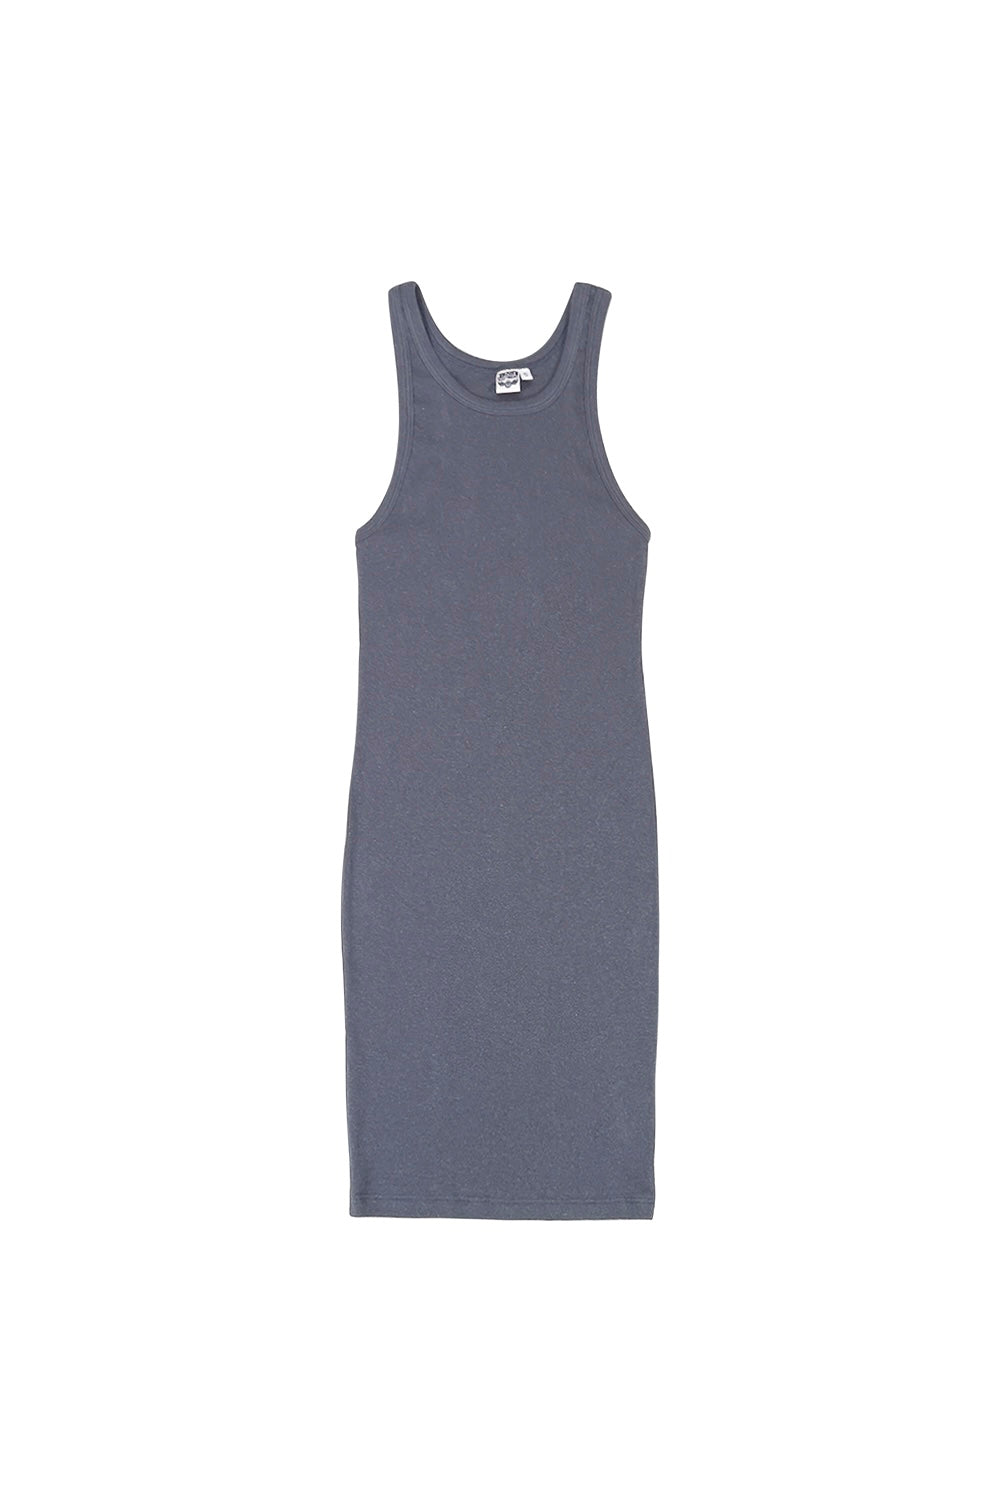 Daphne Dress | Jungmaven Hemp Clothing & Accessories / Color: Diesel Gray